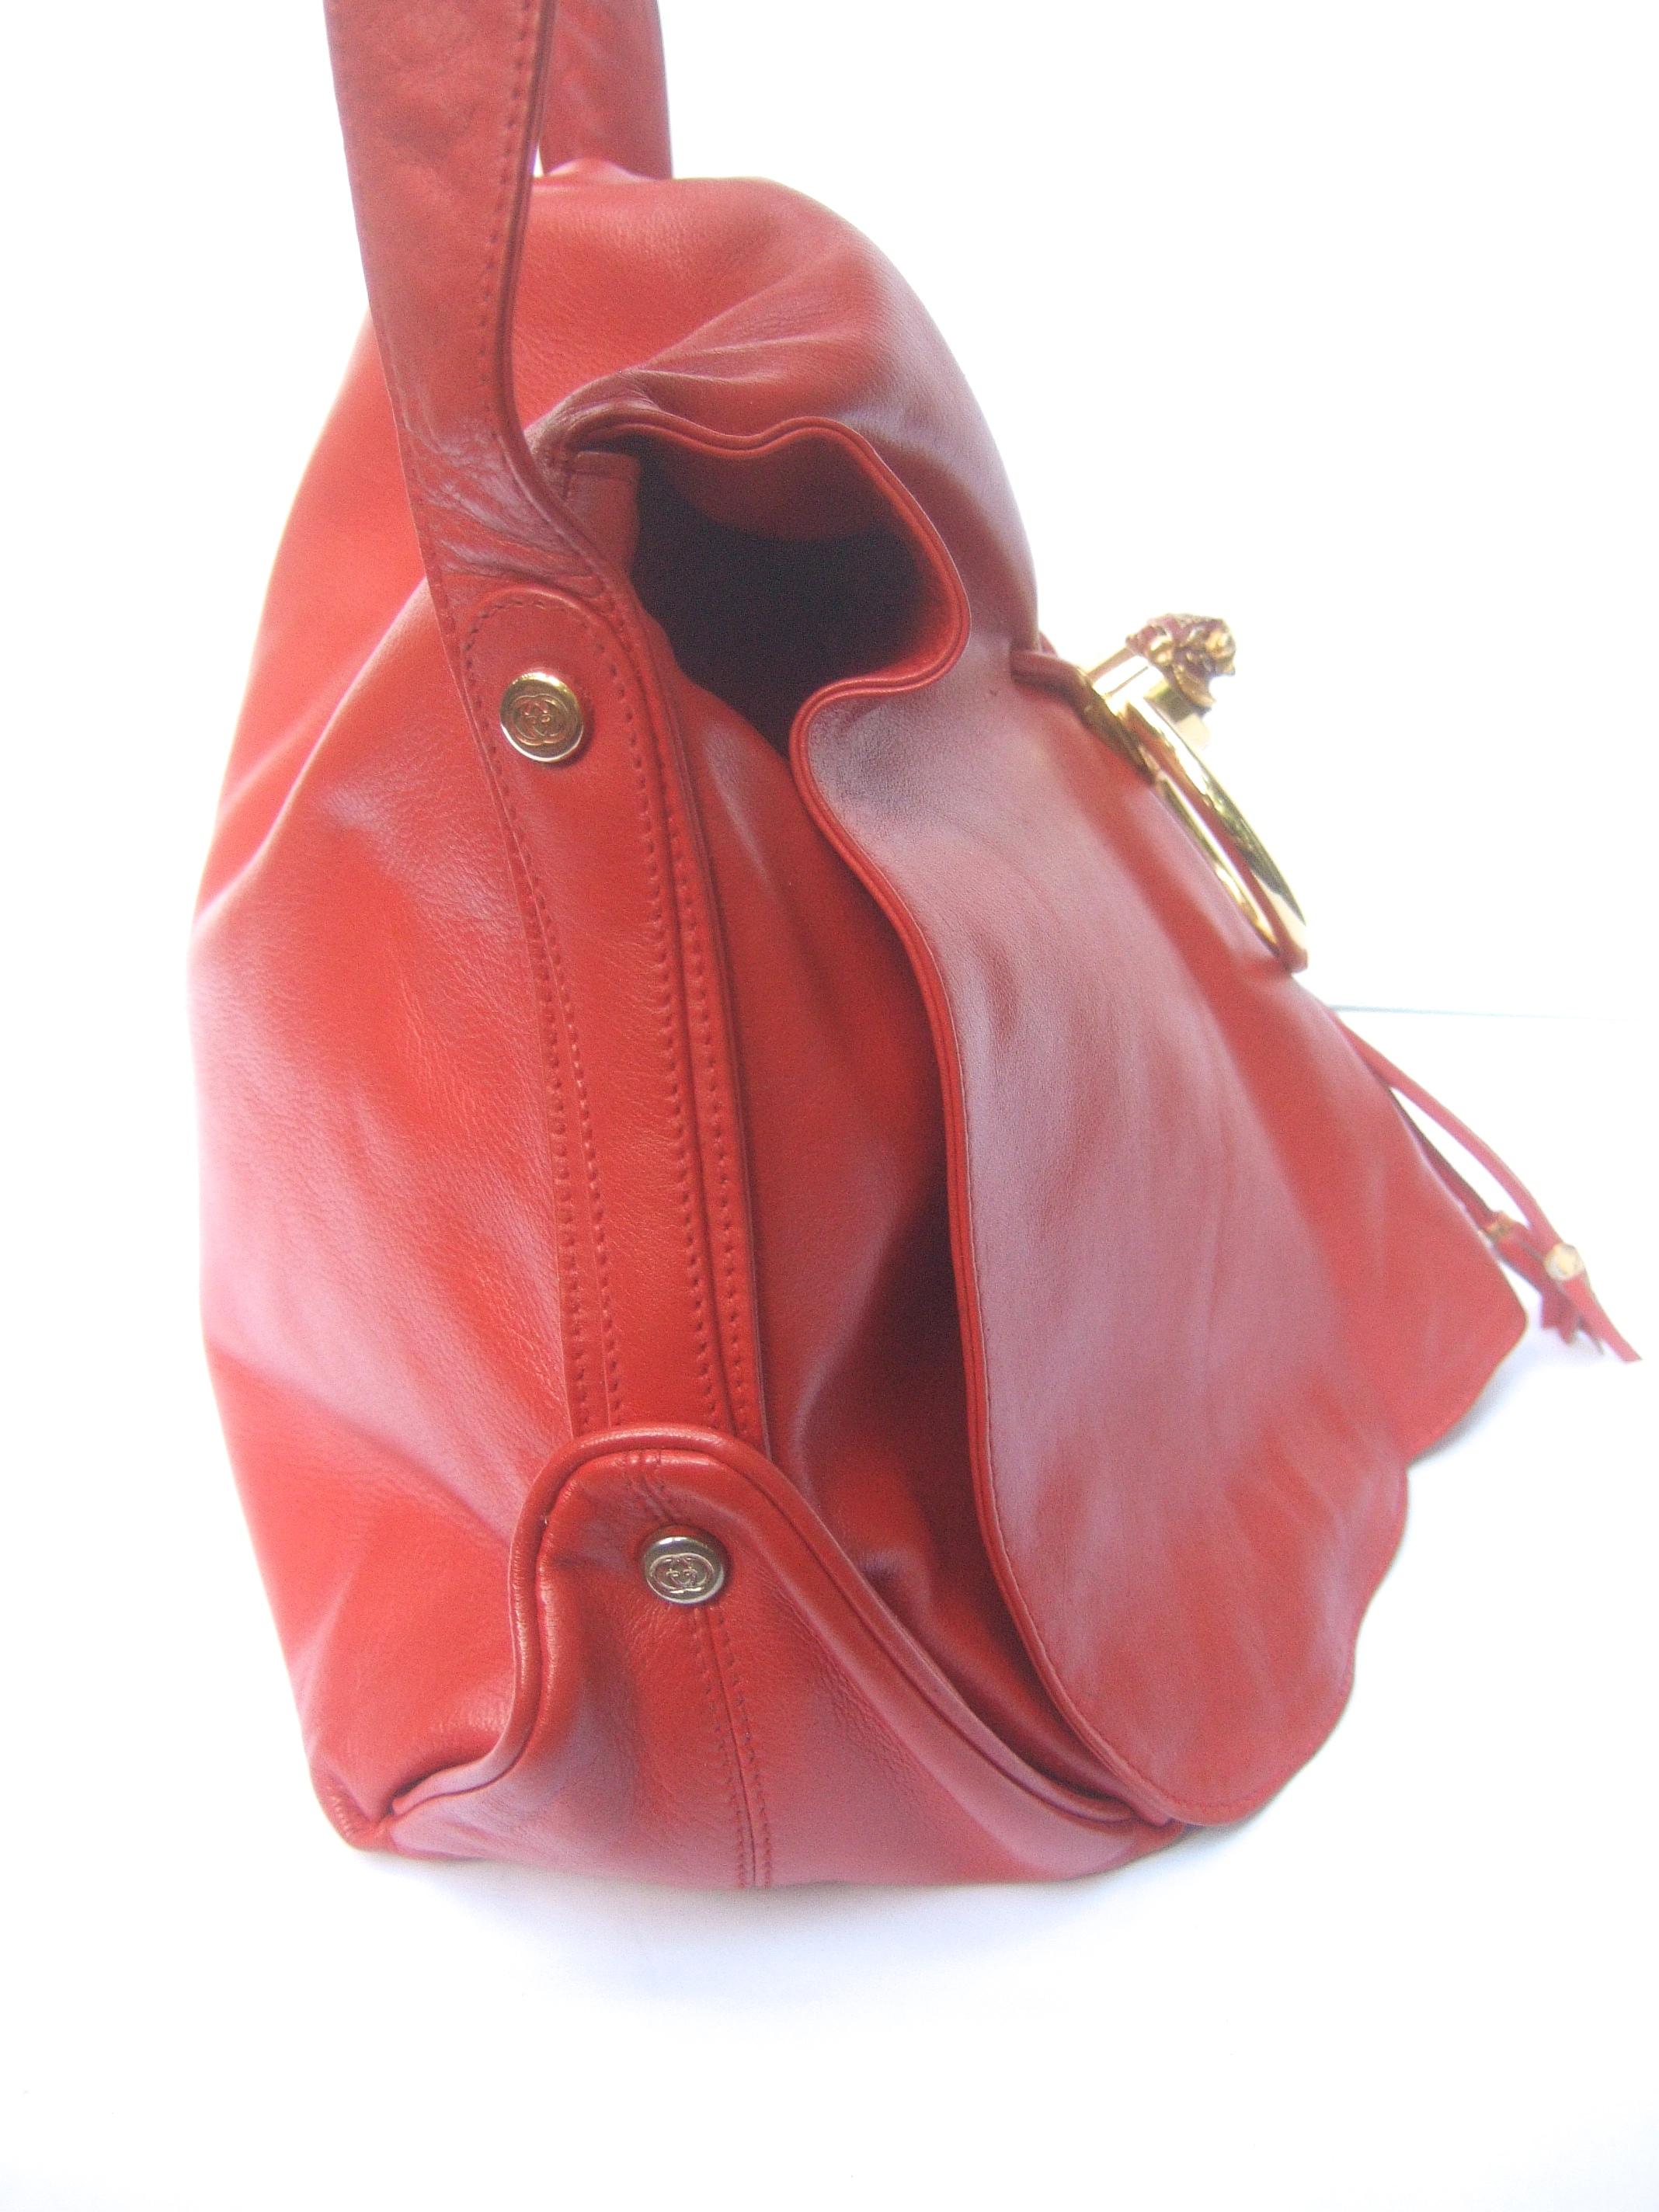 Gucci Italy Rare Red Leather Tiger Emblem Shoulder Bag c 1980s  10